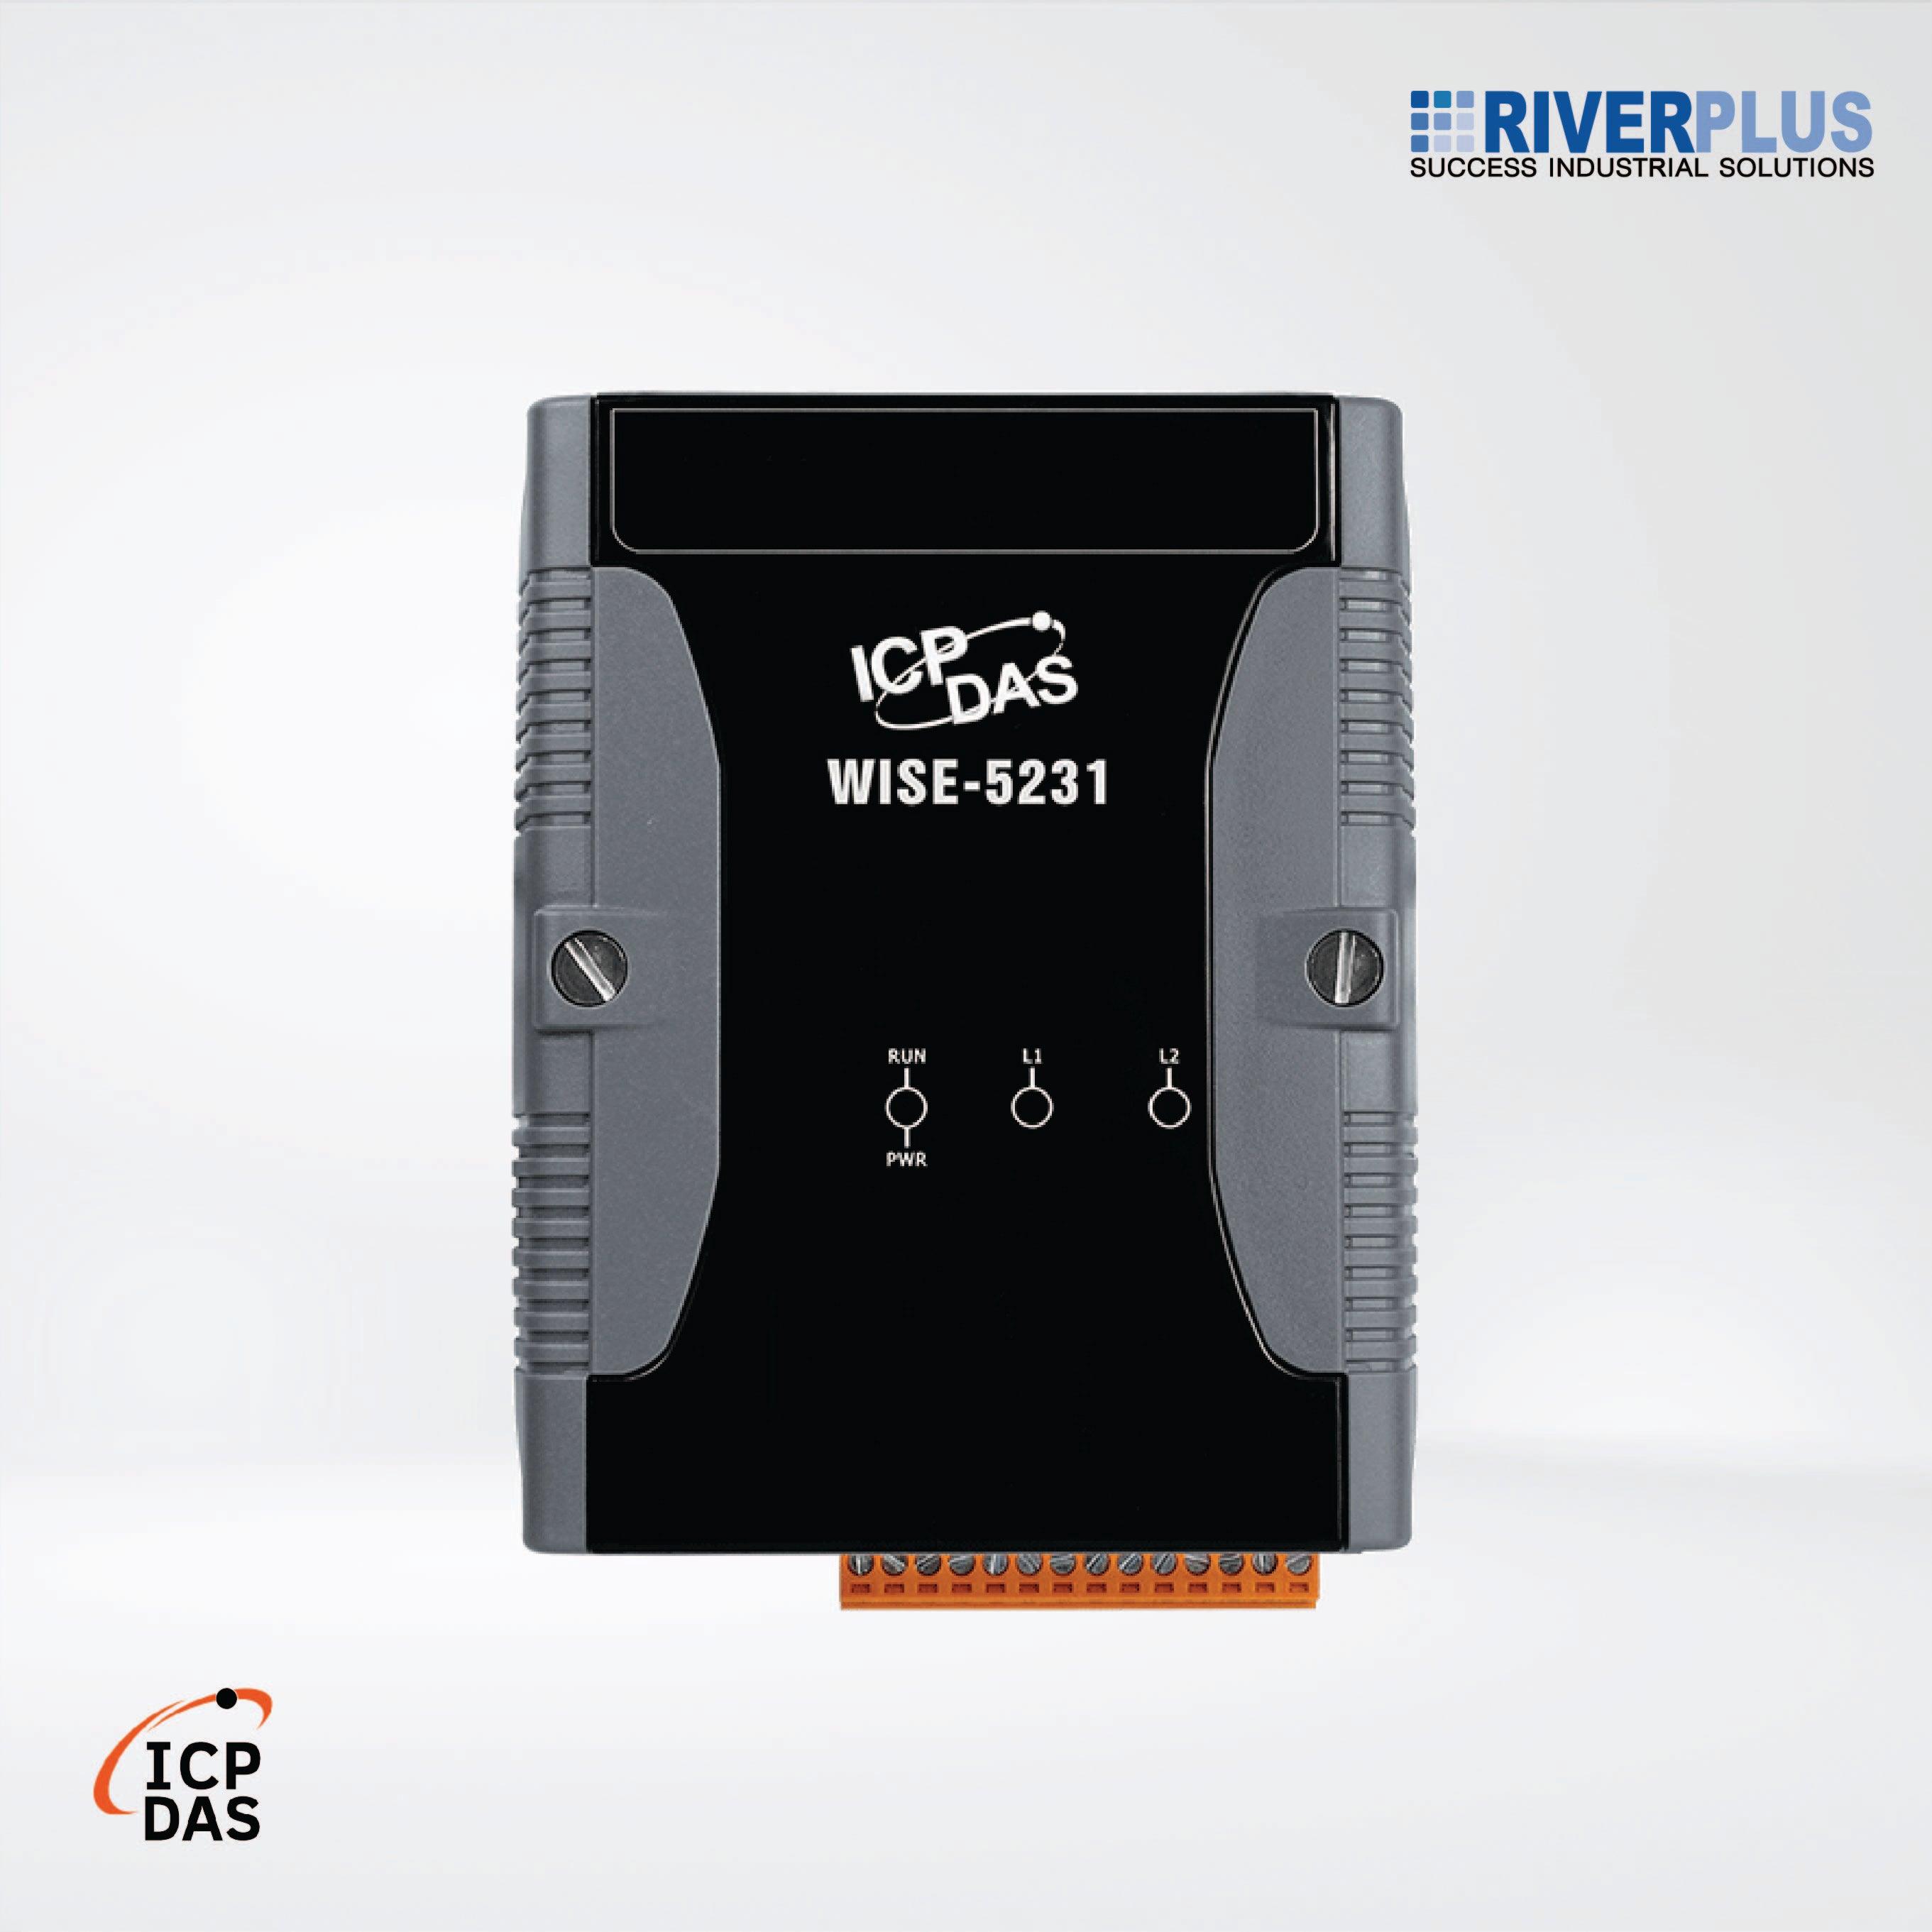 WISE-5231 Intelligent IIoT Edge Controller - Riverplus